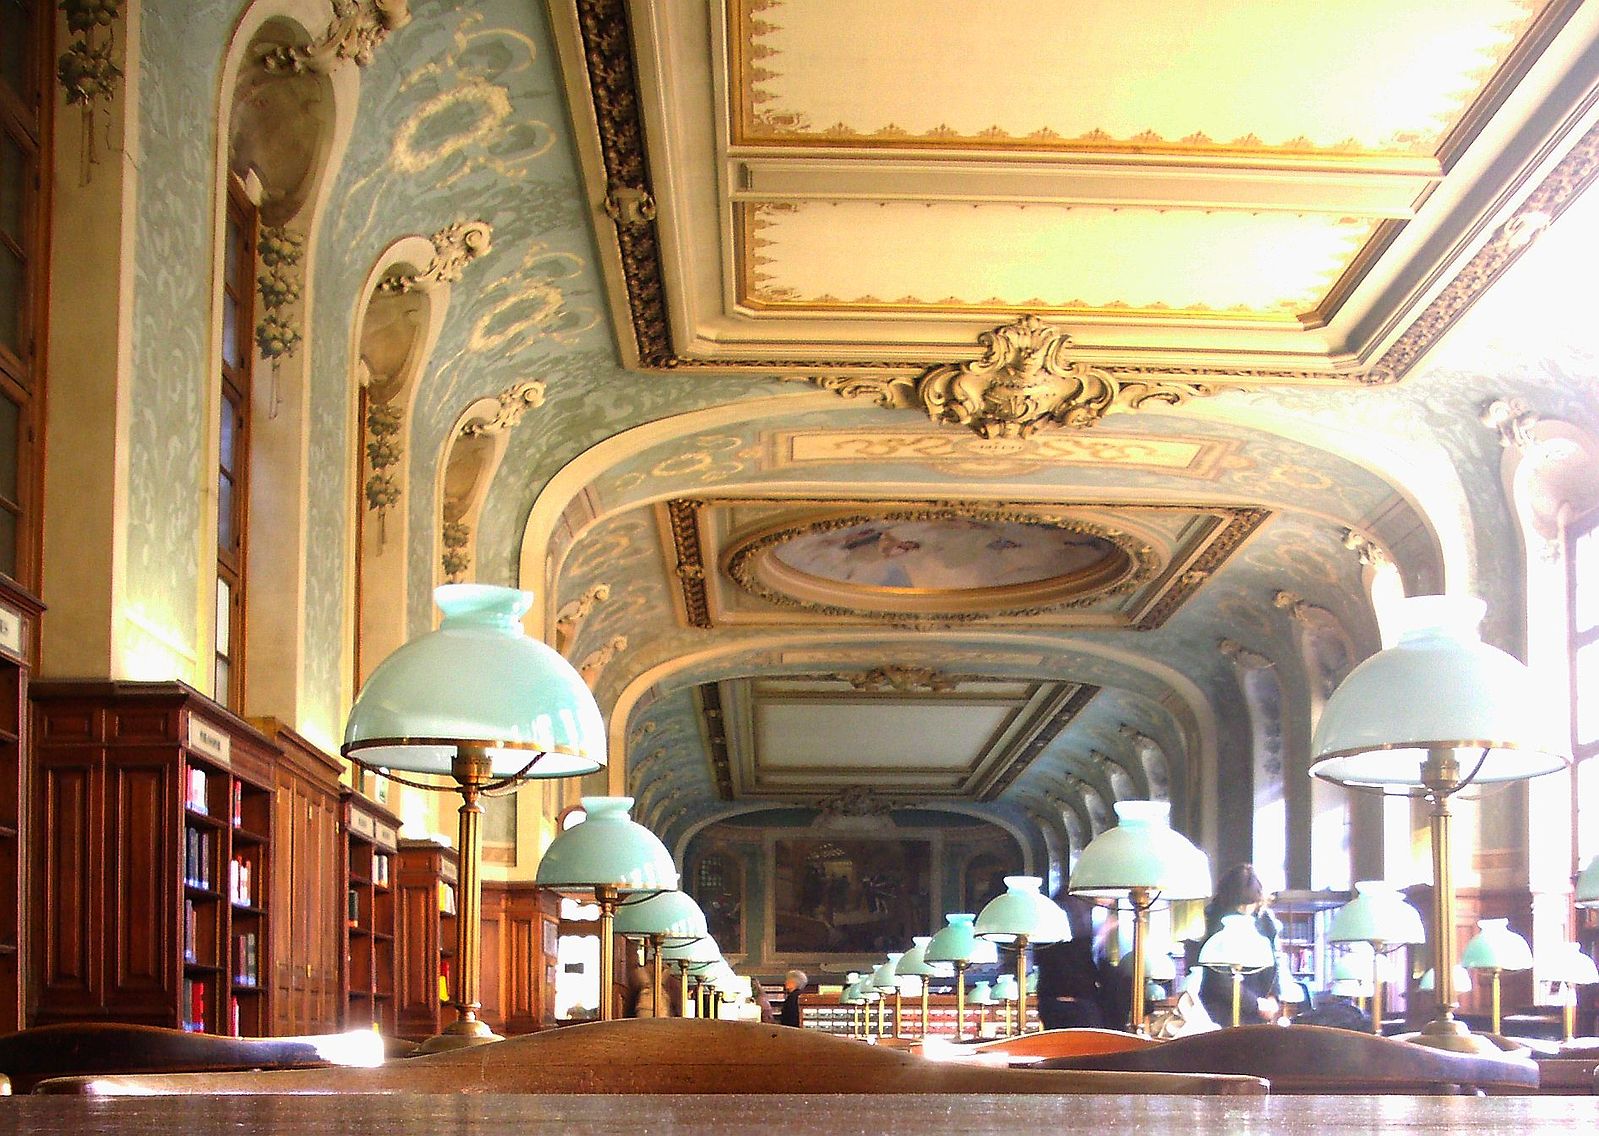 Bibliothèque interuniversitaire de la Sorbonne (Sorbonne Interuniversity Library)